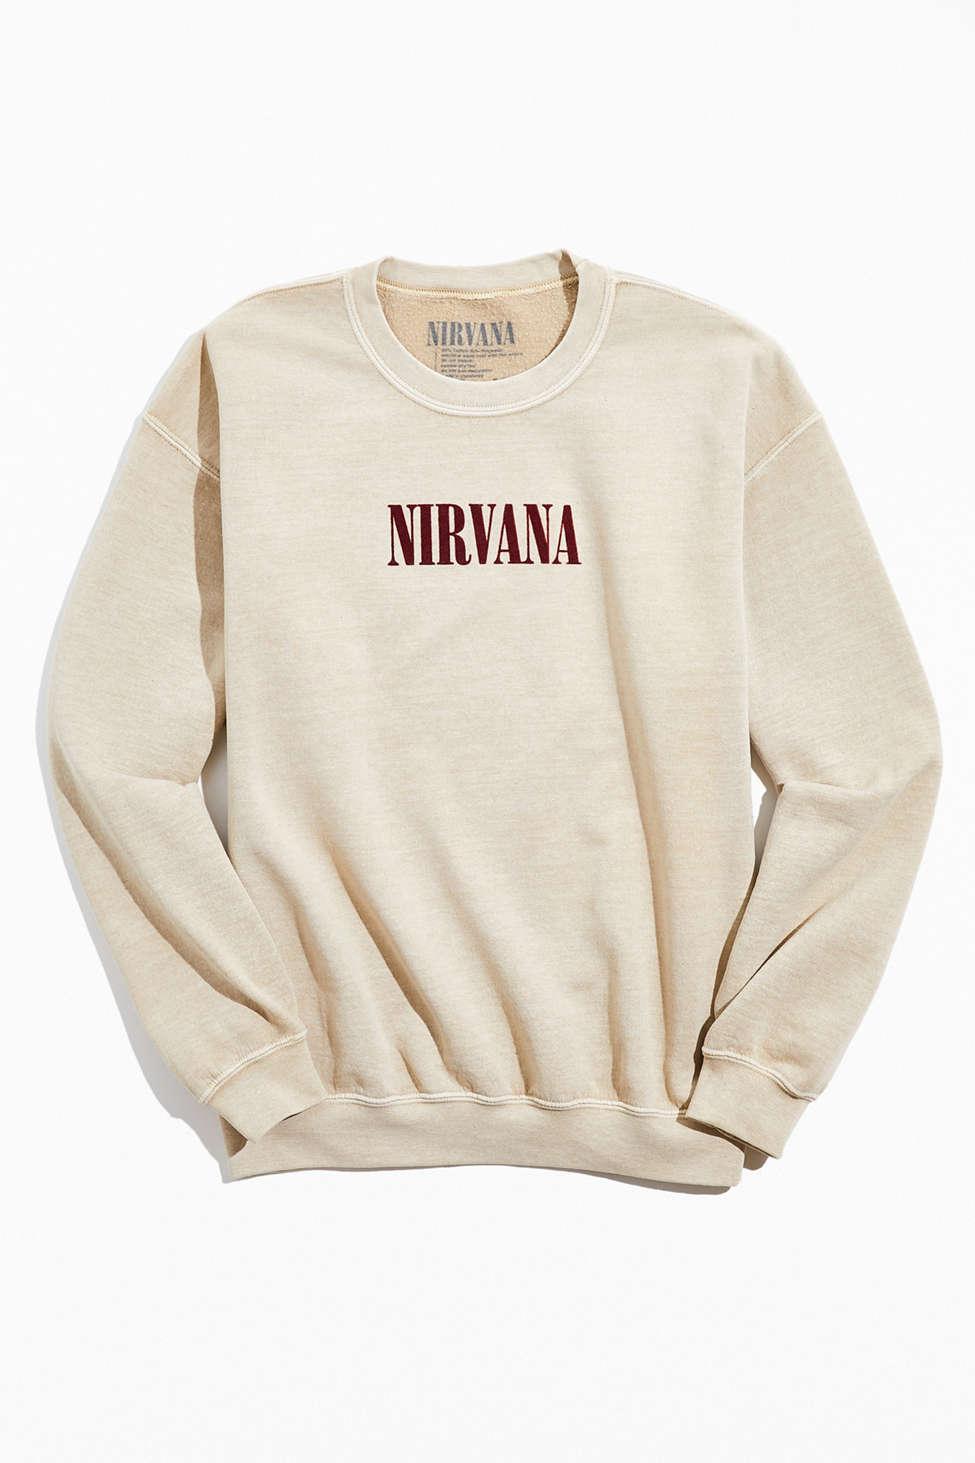 Urban Outfitters Nirvana In Utero Crew Neck Sweatshirt for Men | Lyst